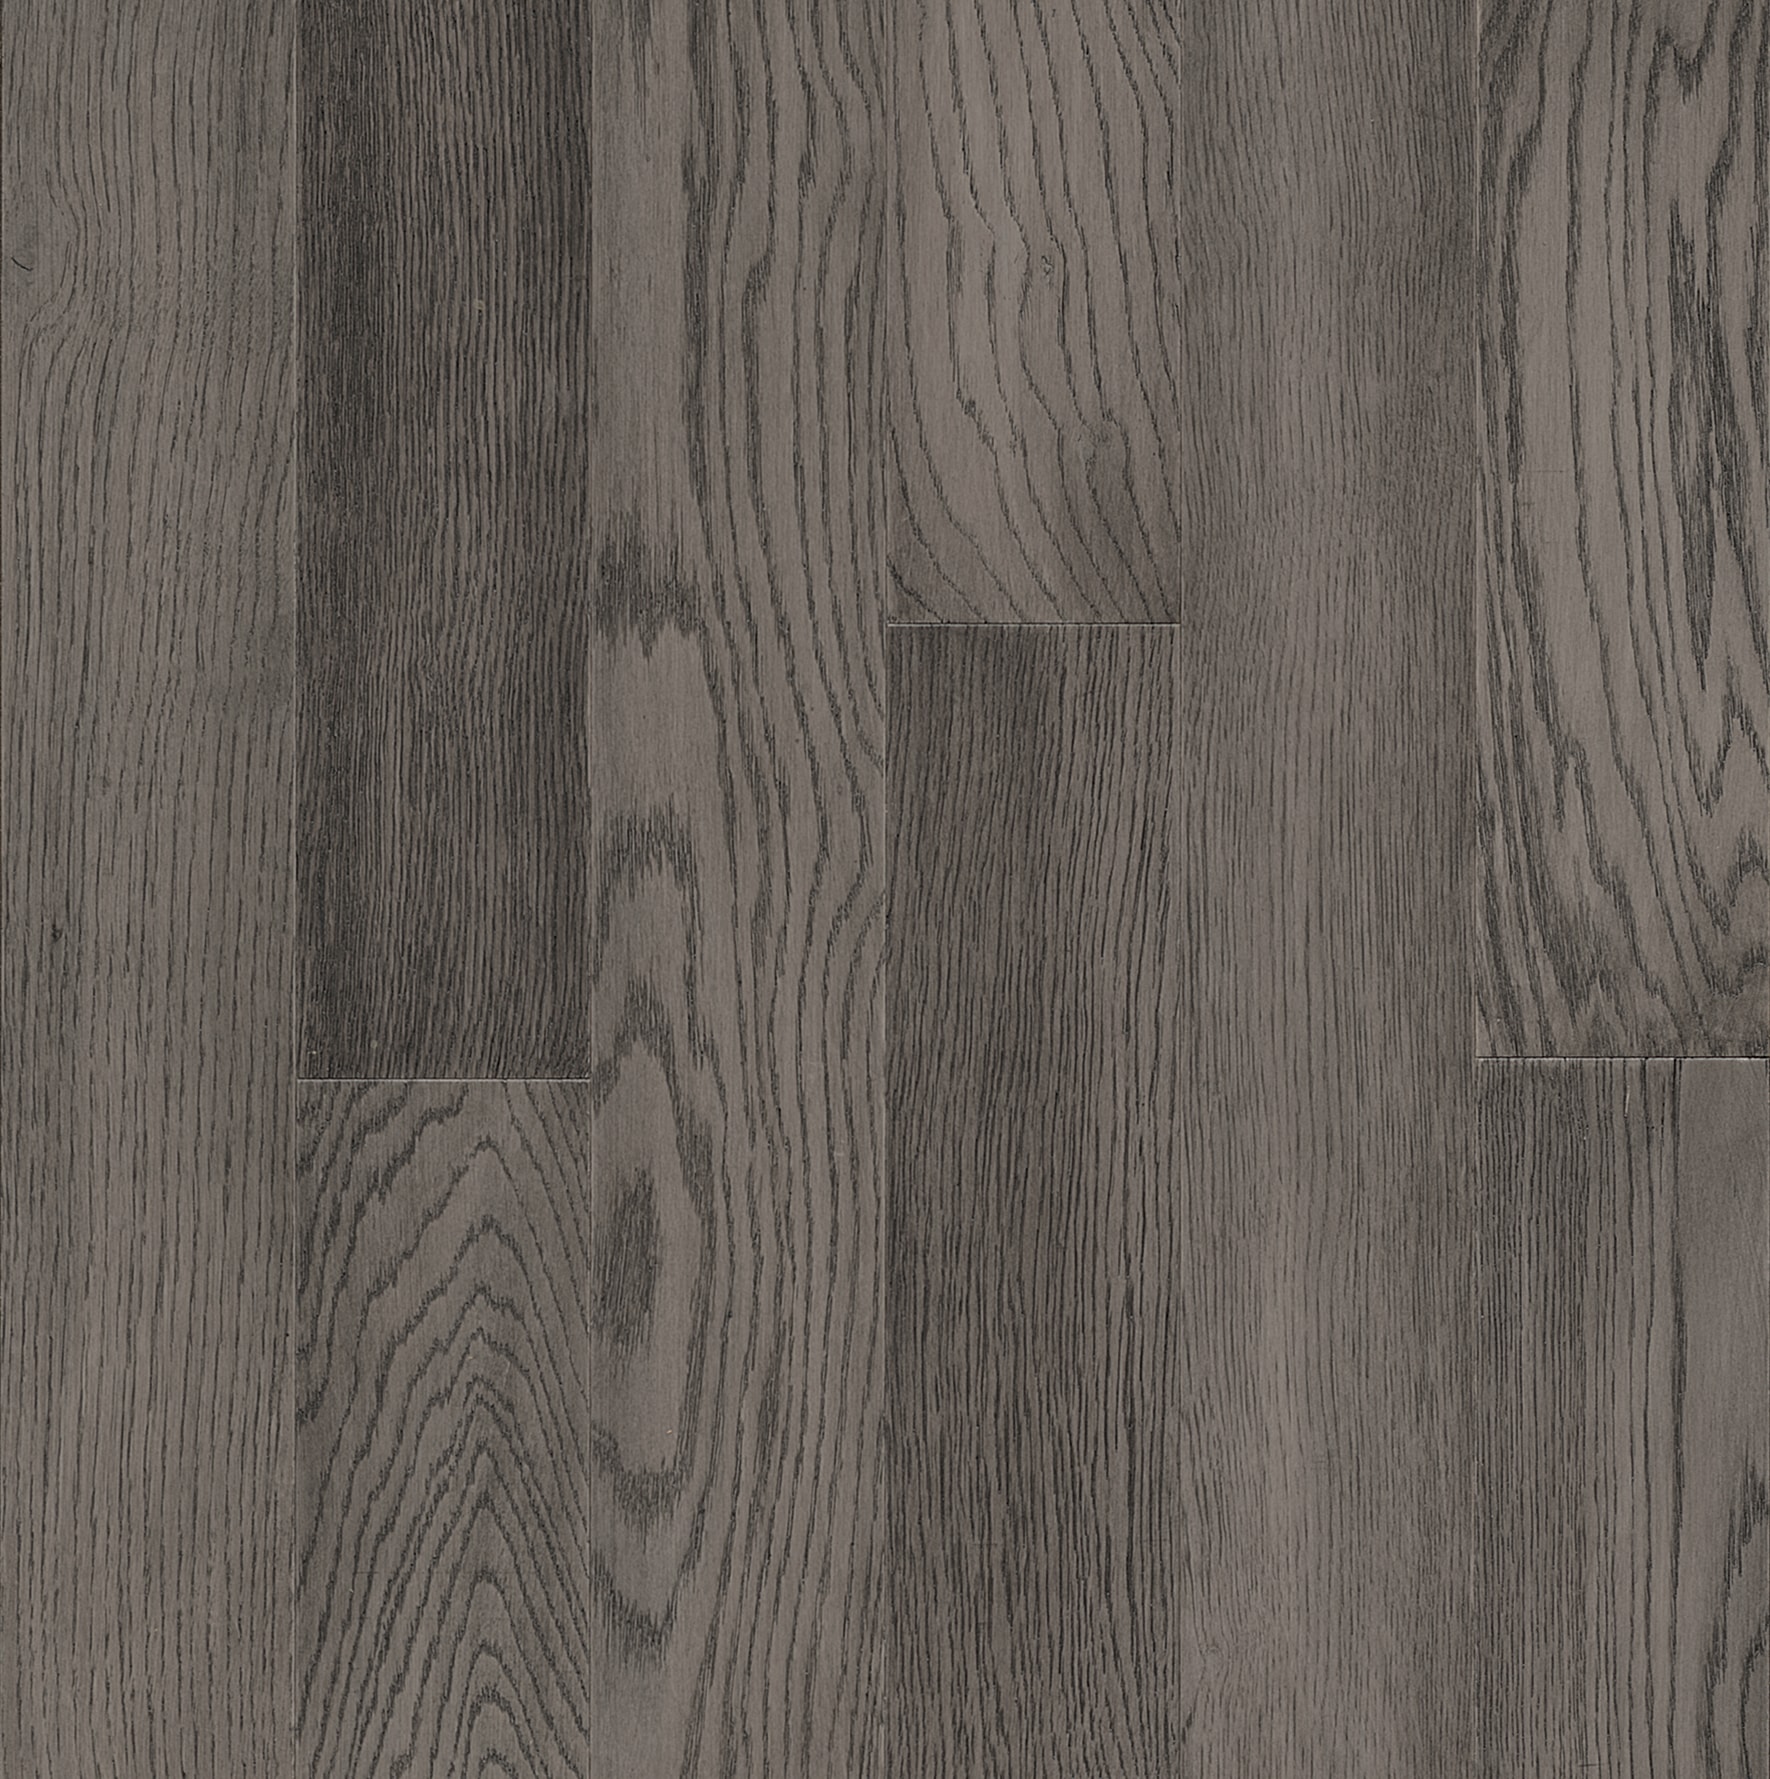 Medium gray hardwood floor